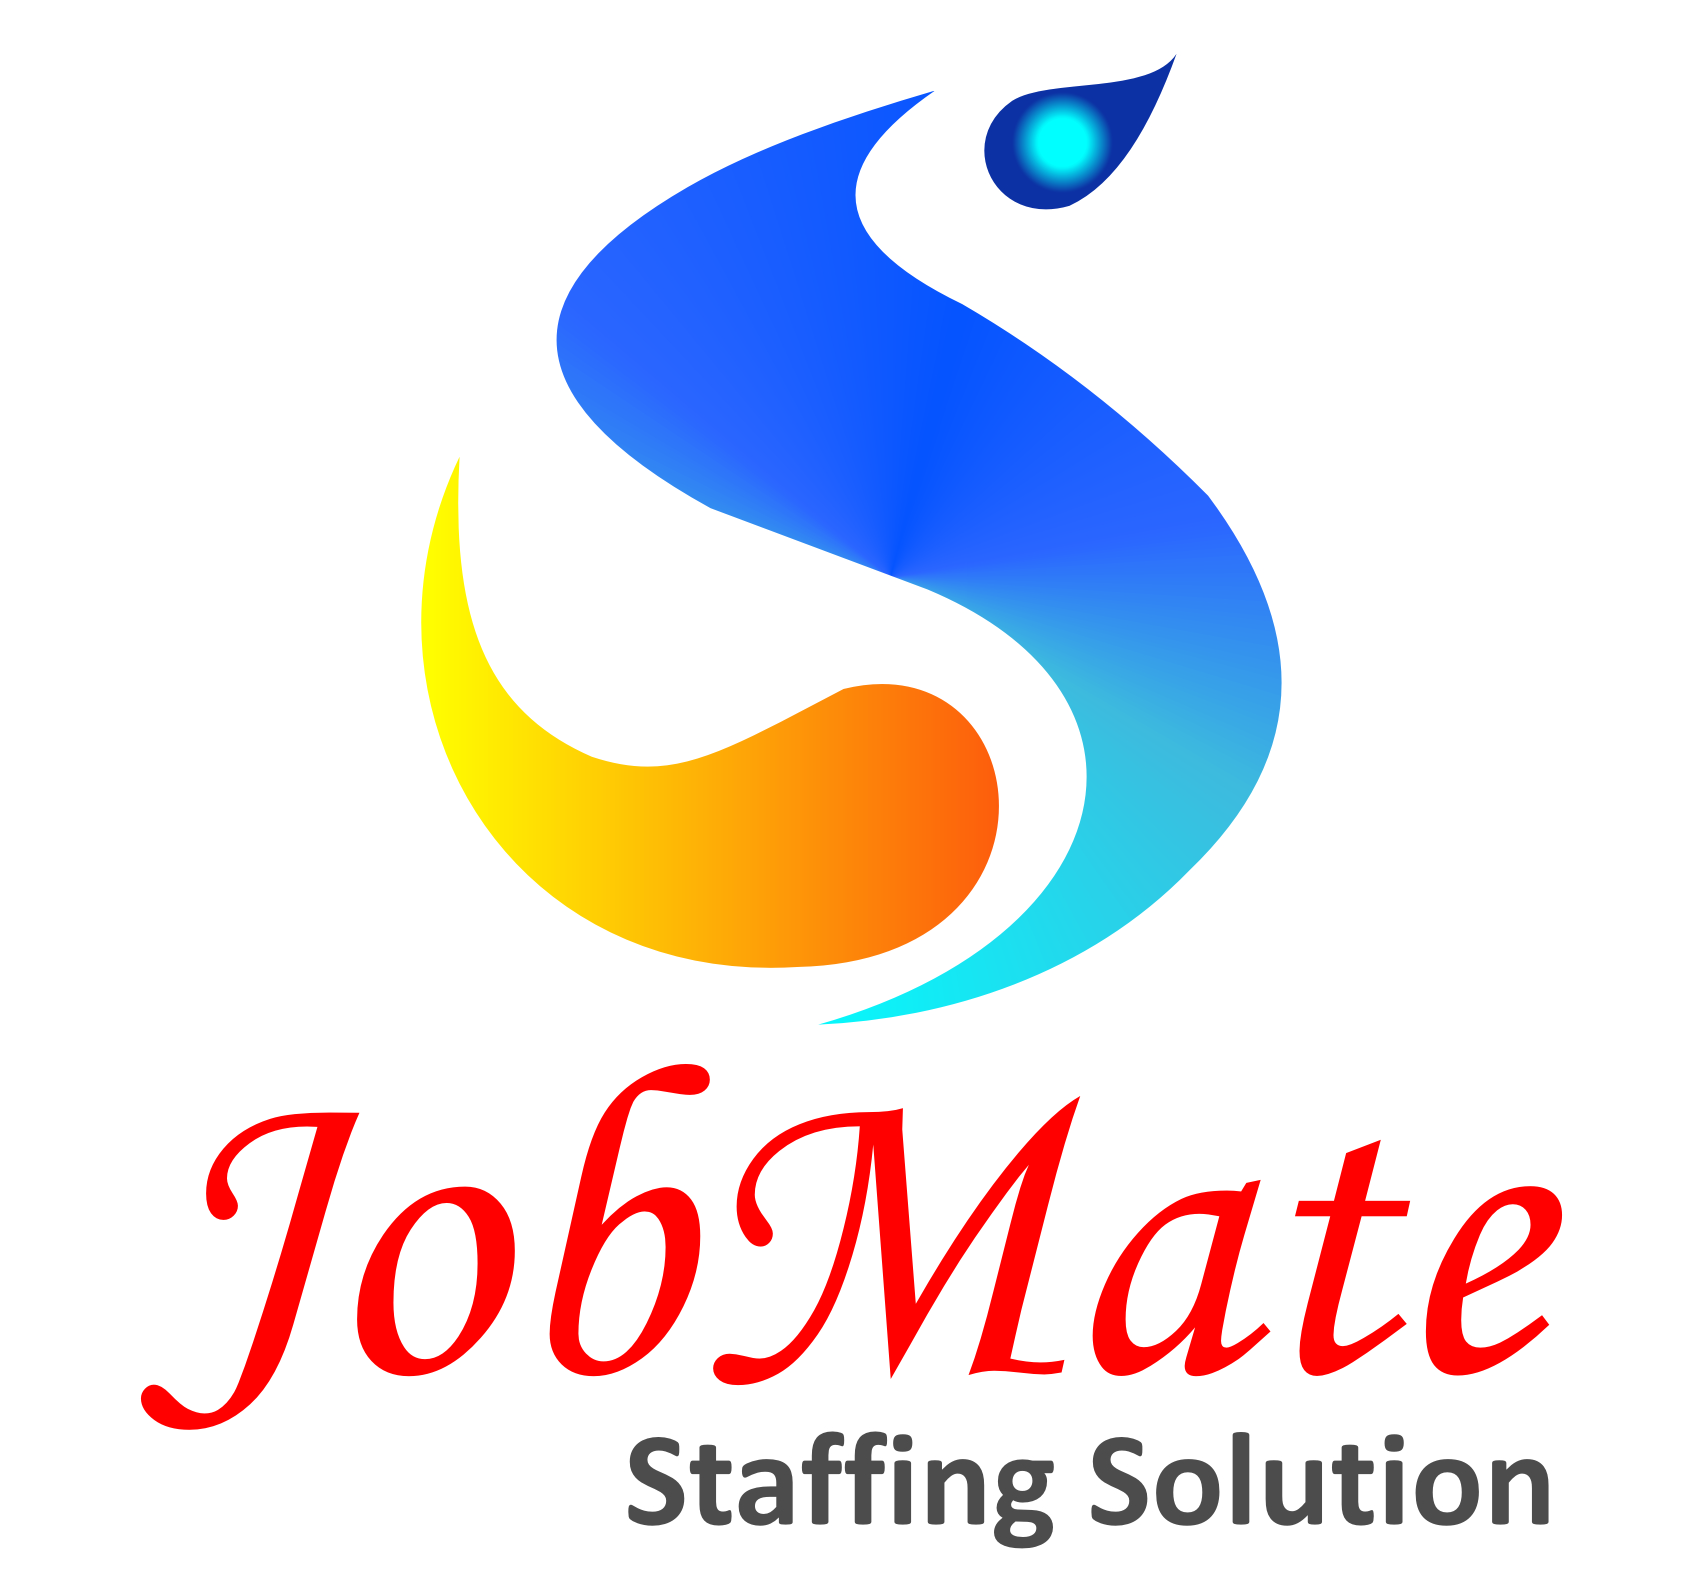 Jobmate Staffing Solution